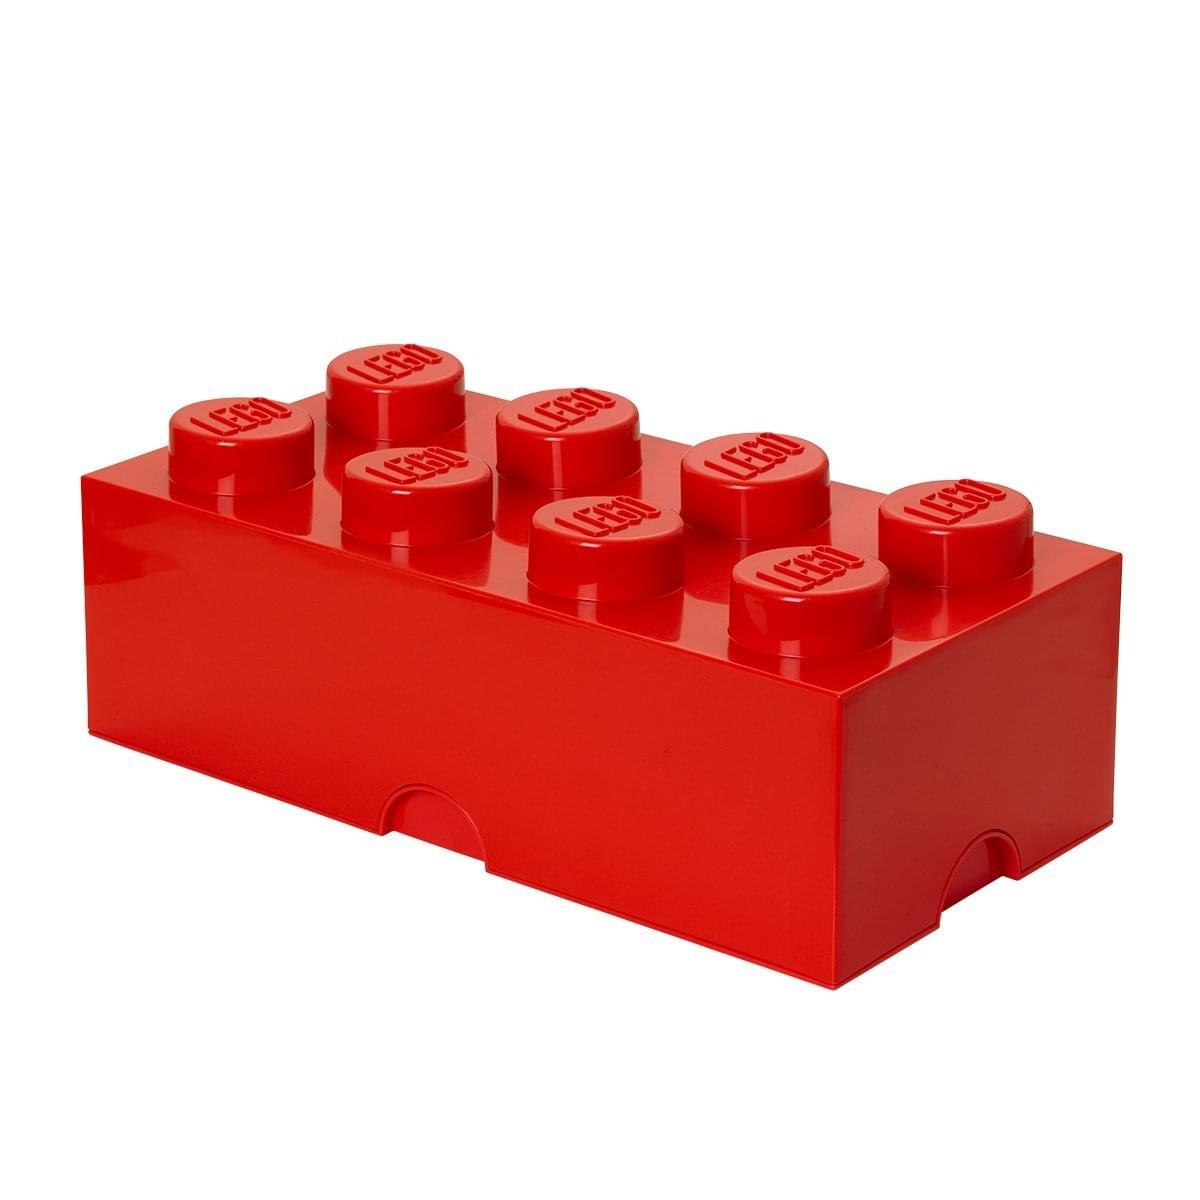 Photos - Construction Toy LEGO Storage Brick 8, Bright Red RMC-40040630-C